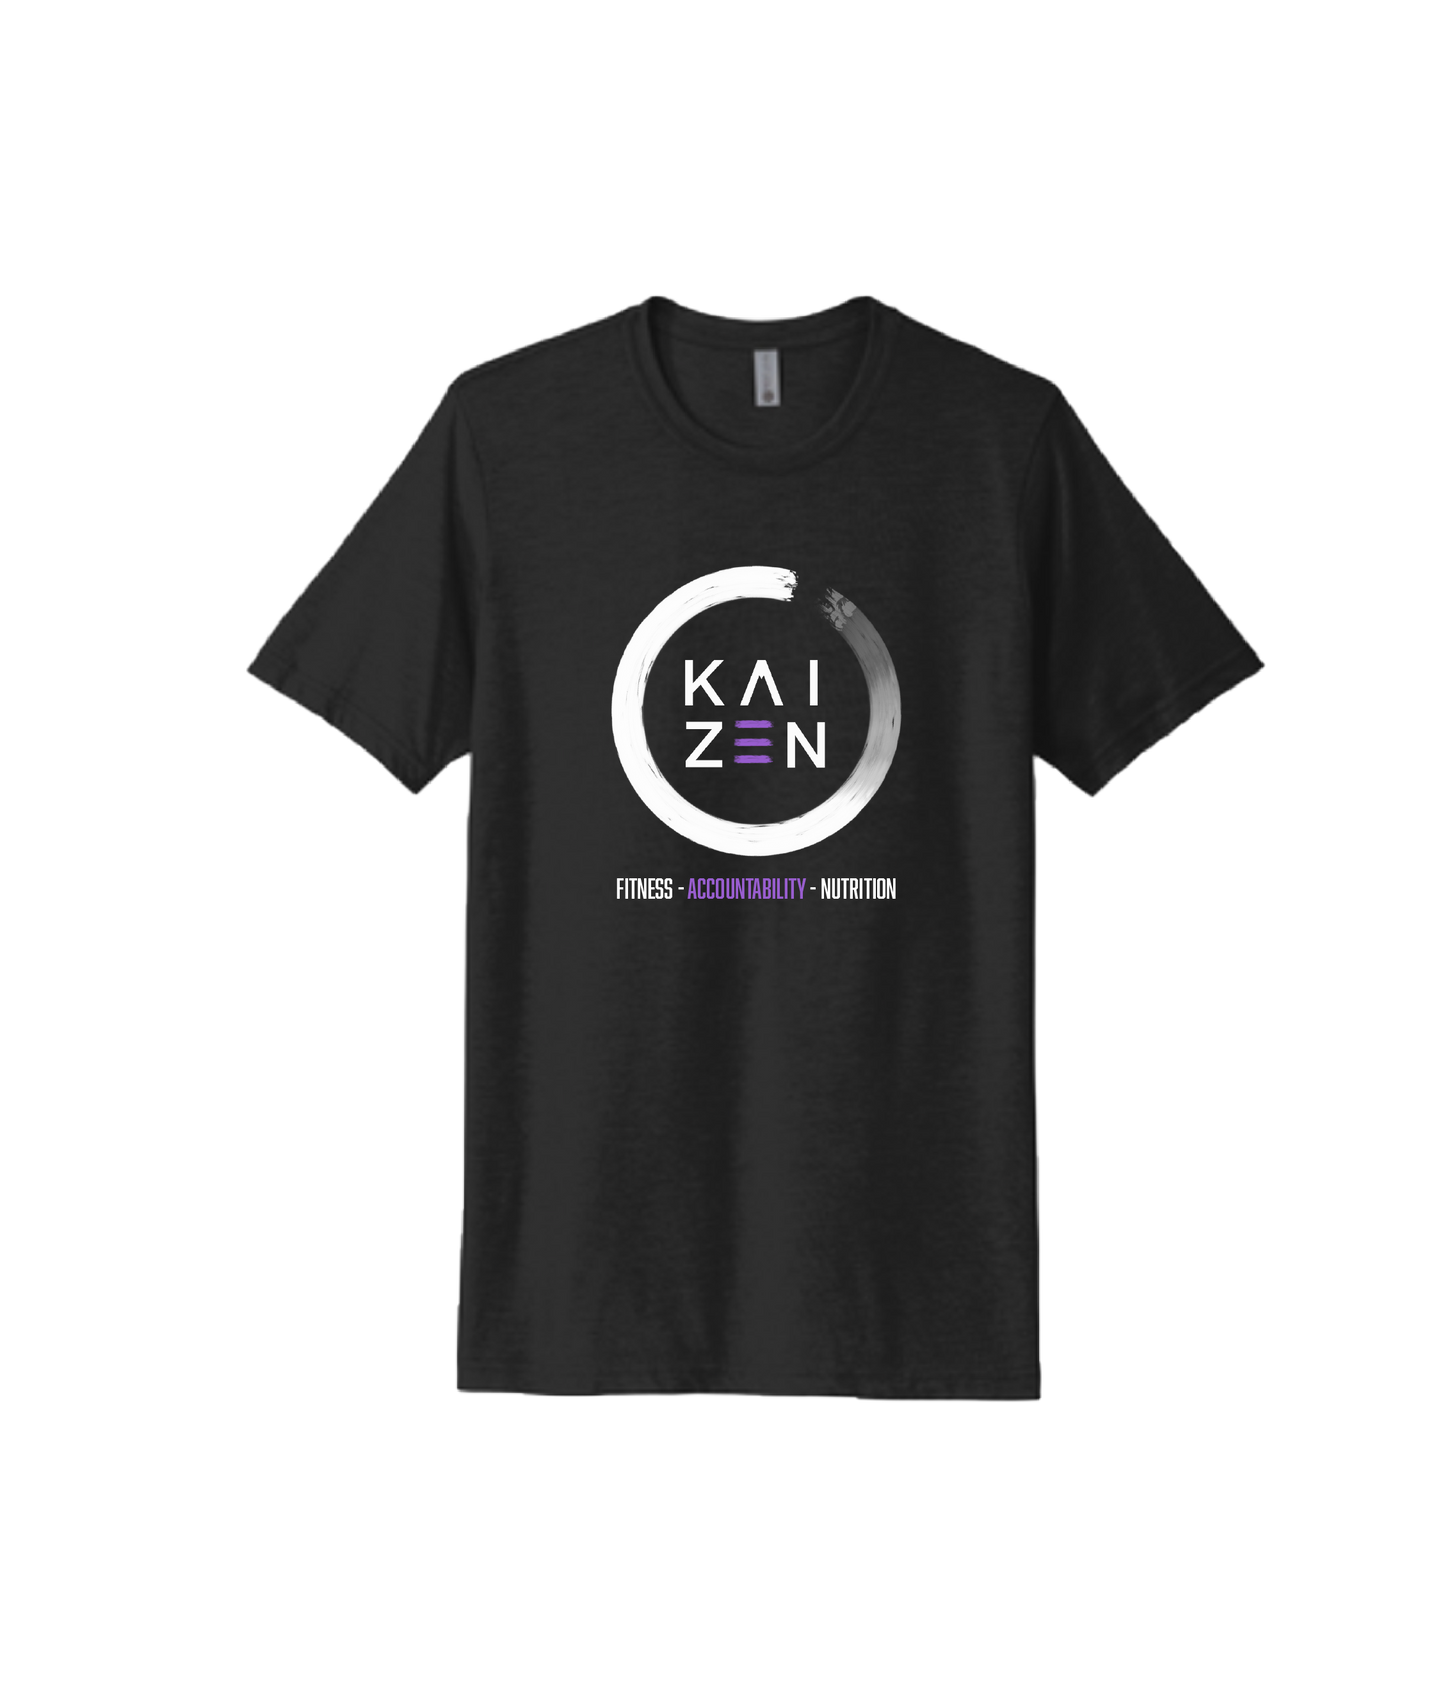 Kaizen logo shirt